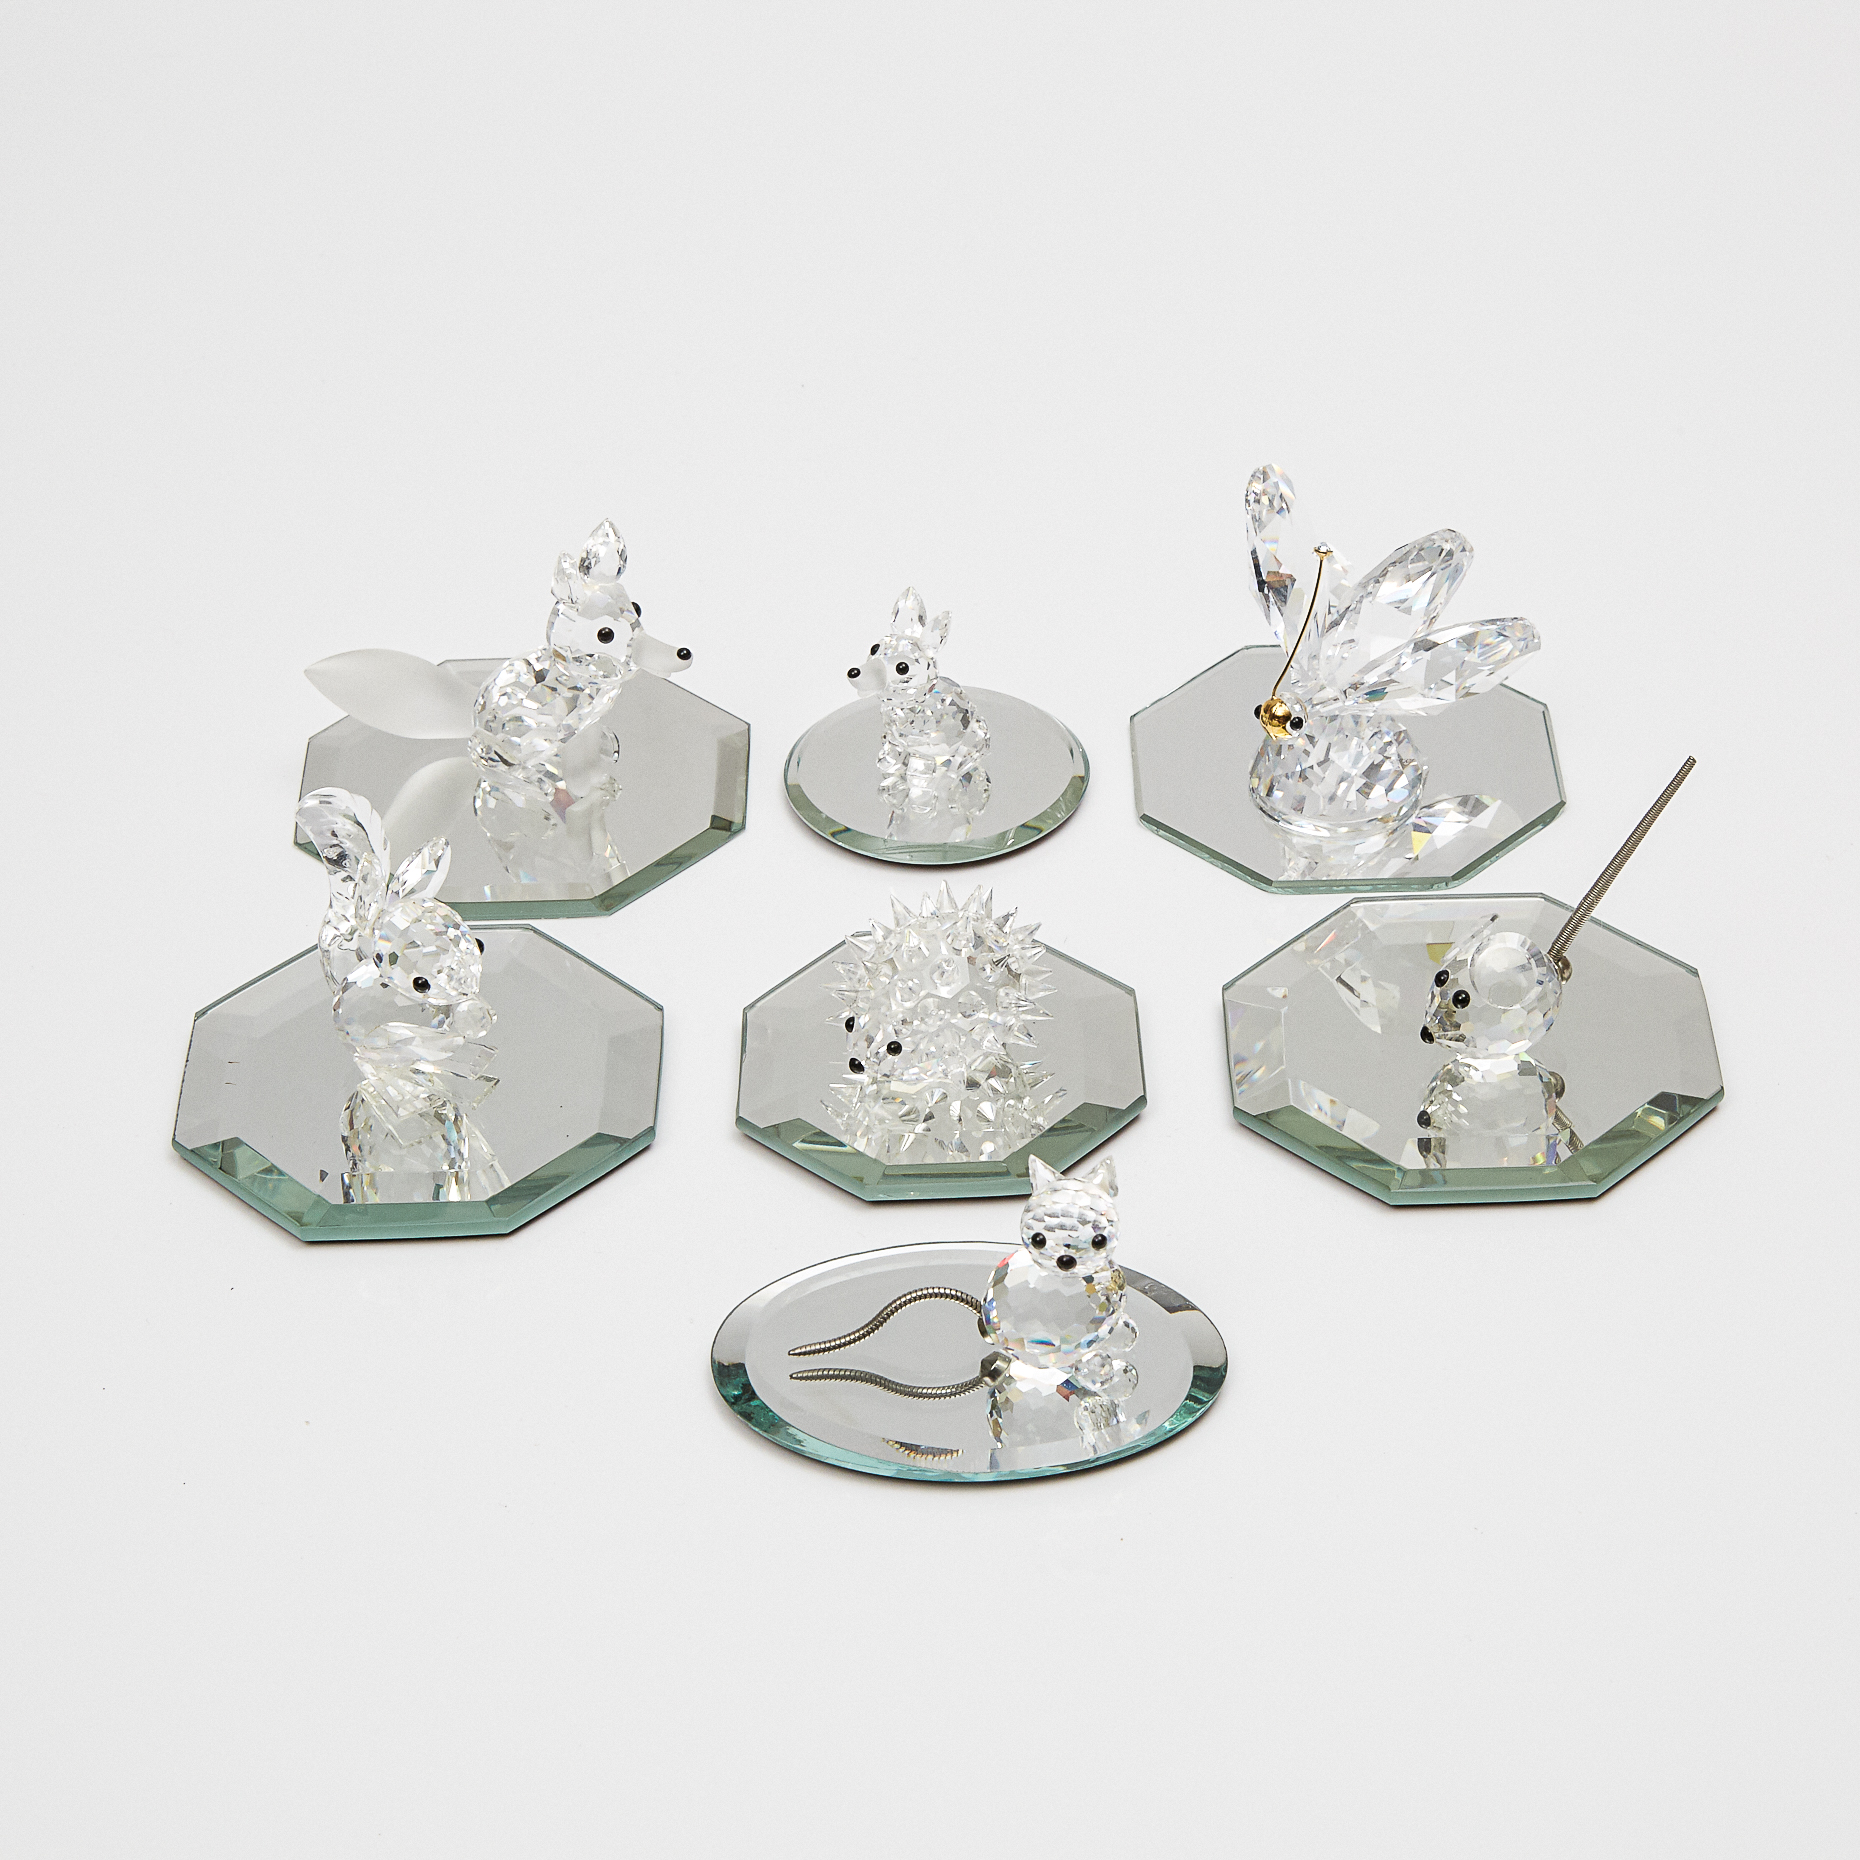 Seven Swarovski Crystal Animal Figures, 20th century